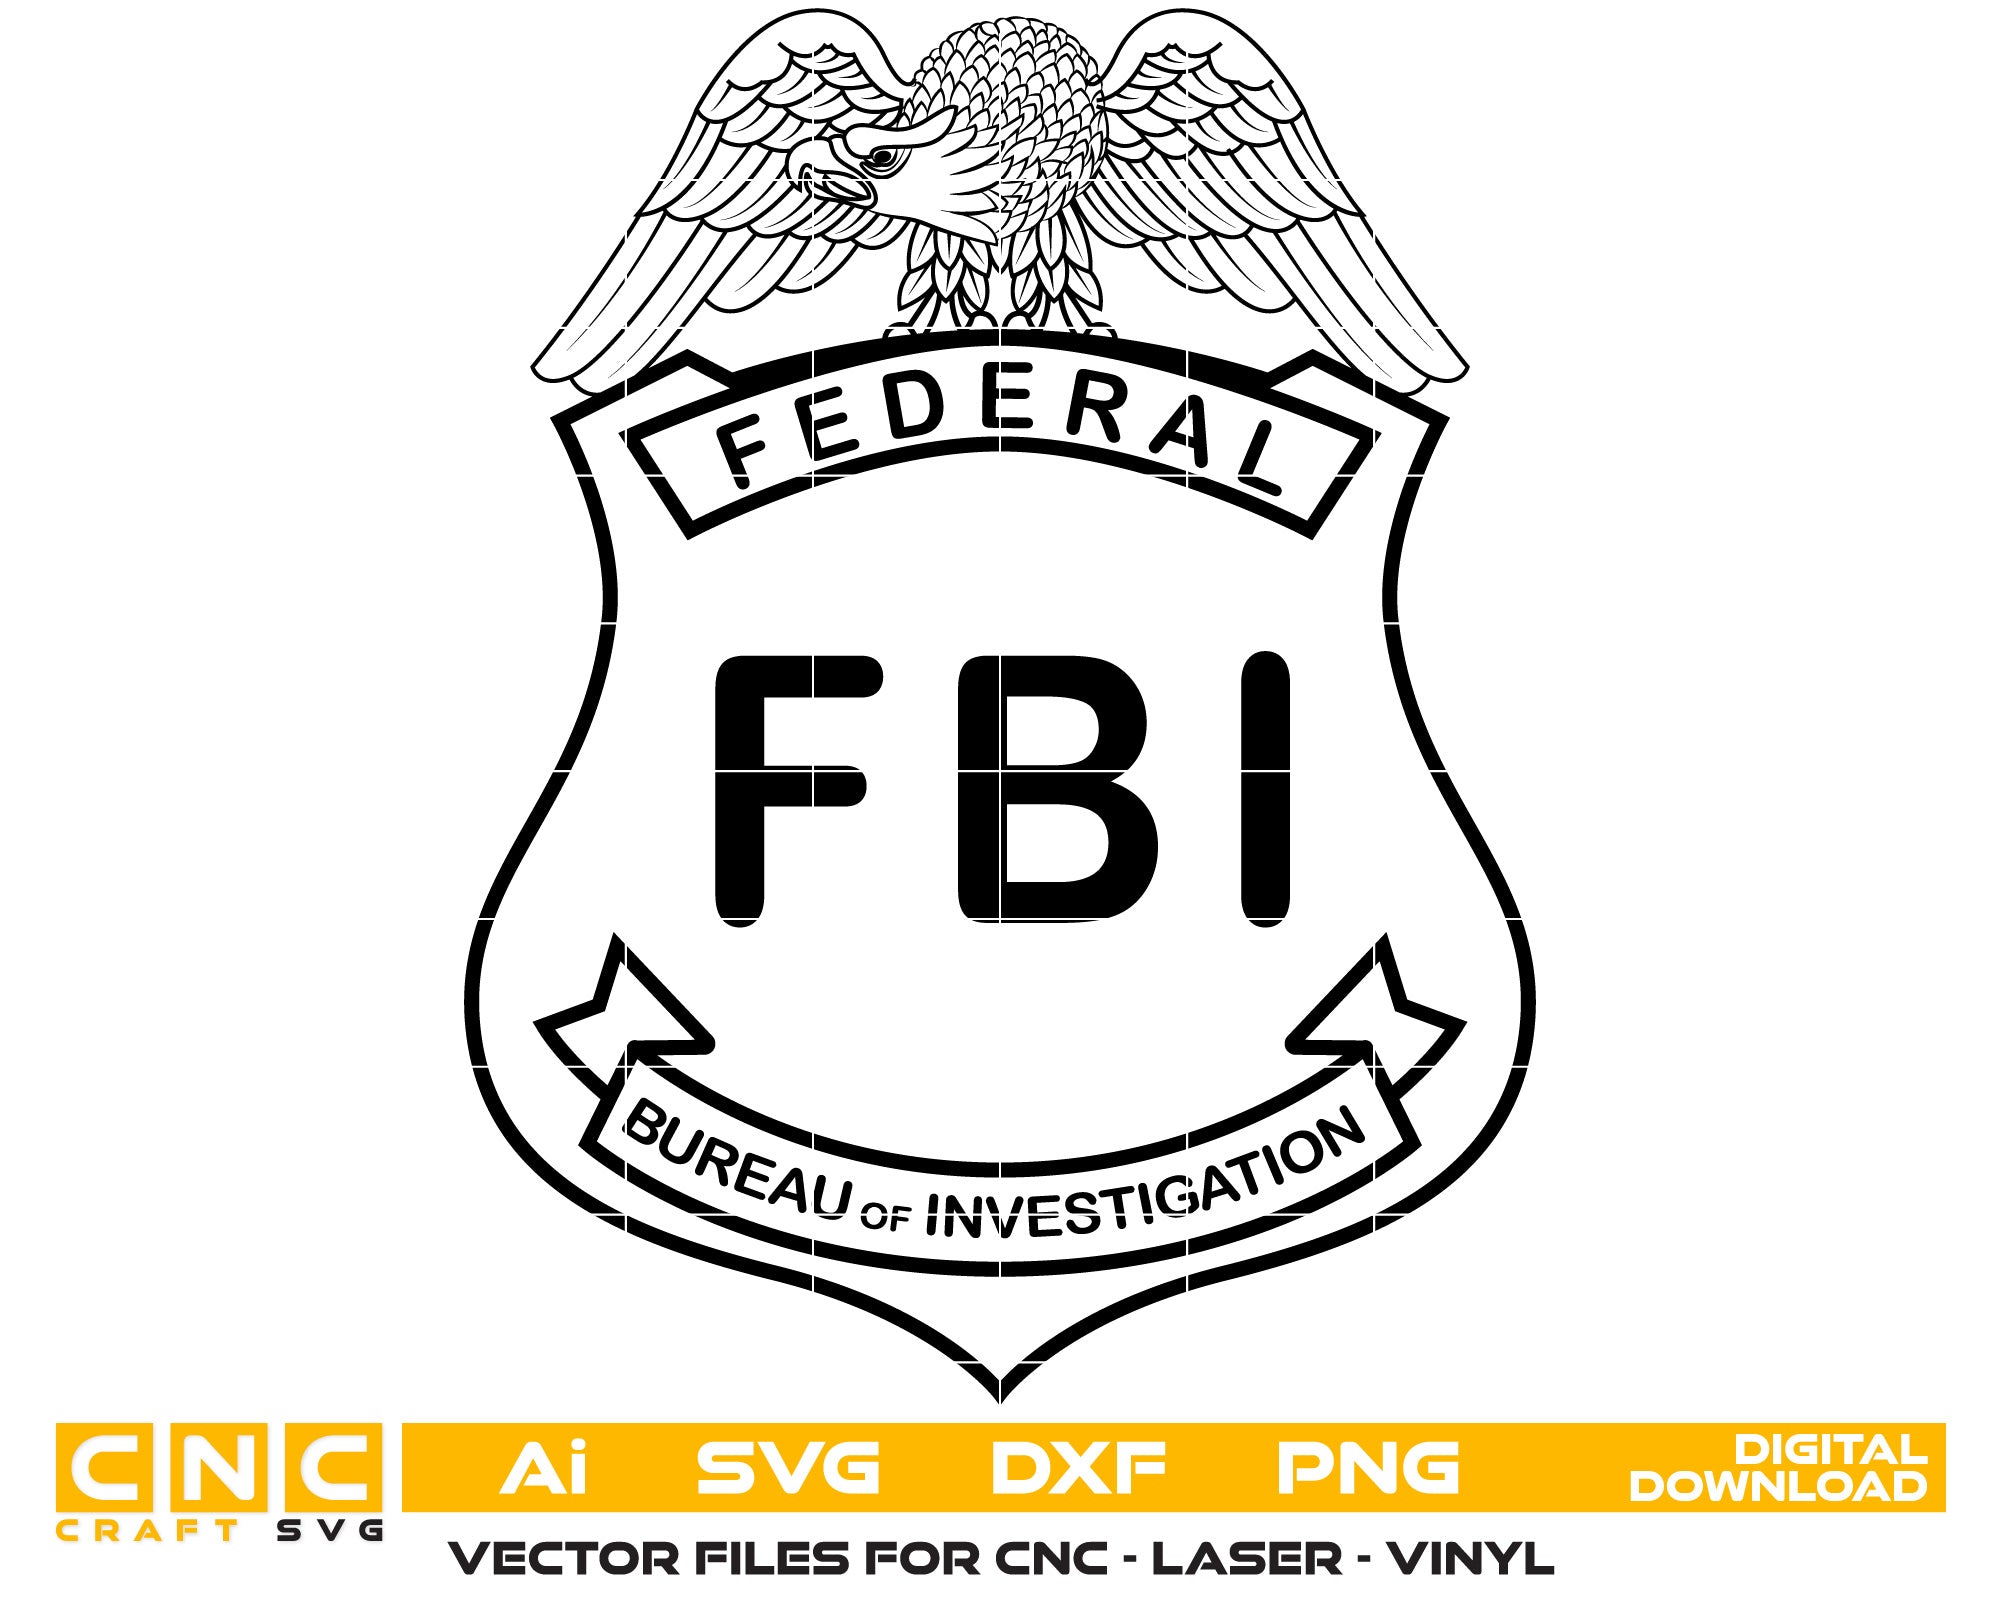 Federal Bureau of Investigation Vector Art, Ai,SVG, DXF, PNG, Digital Files